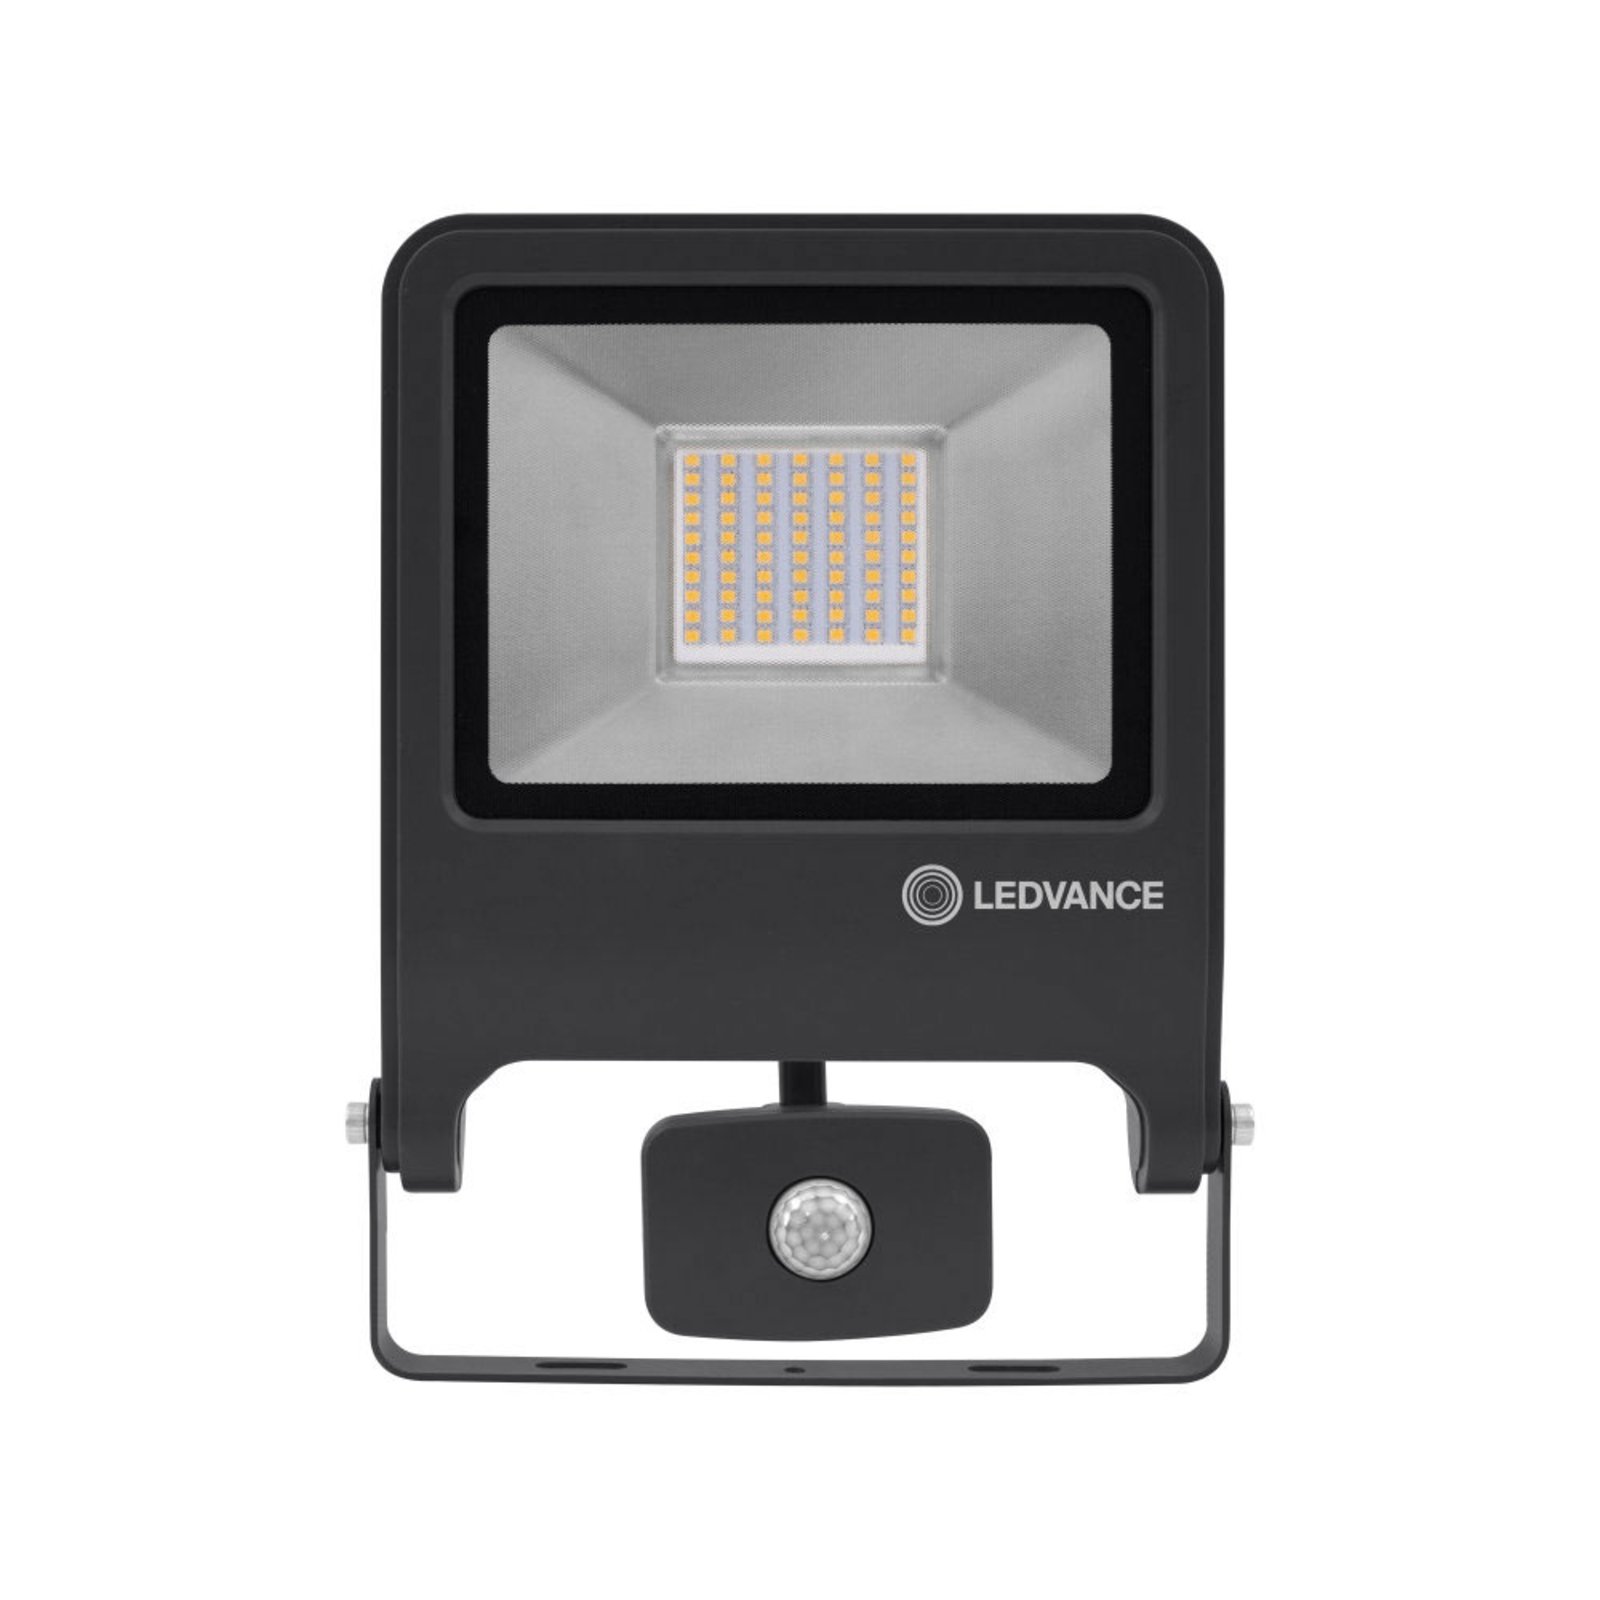 LEDVANCE Endura Прожектор Sensor LED прожектор 50W